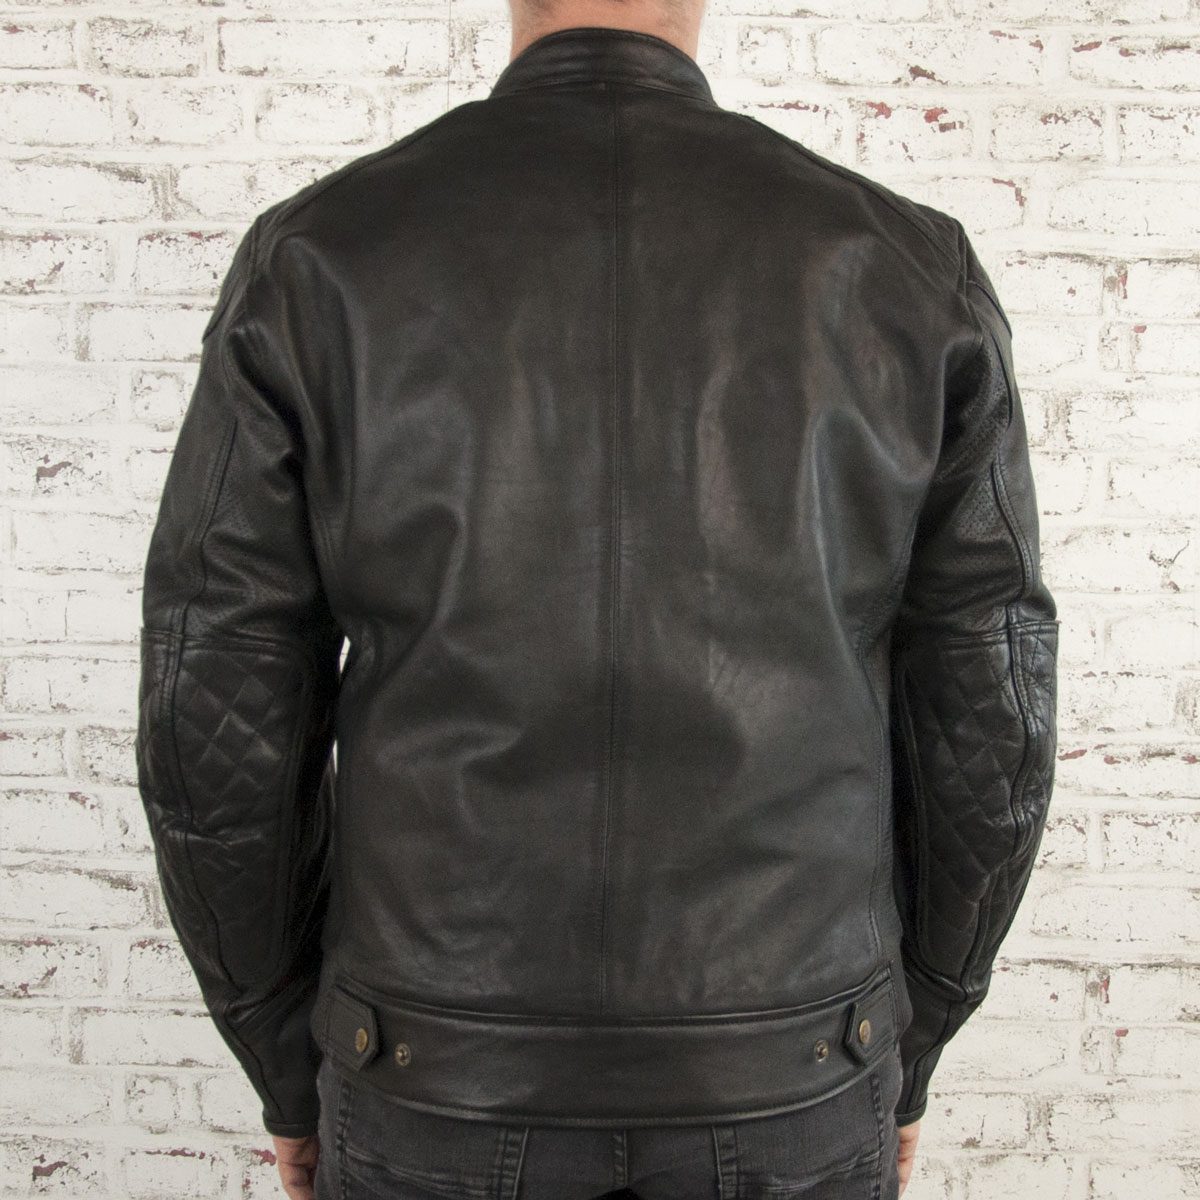 Rogue Leather Jacket Black - Age of Glory